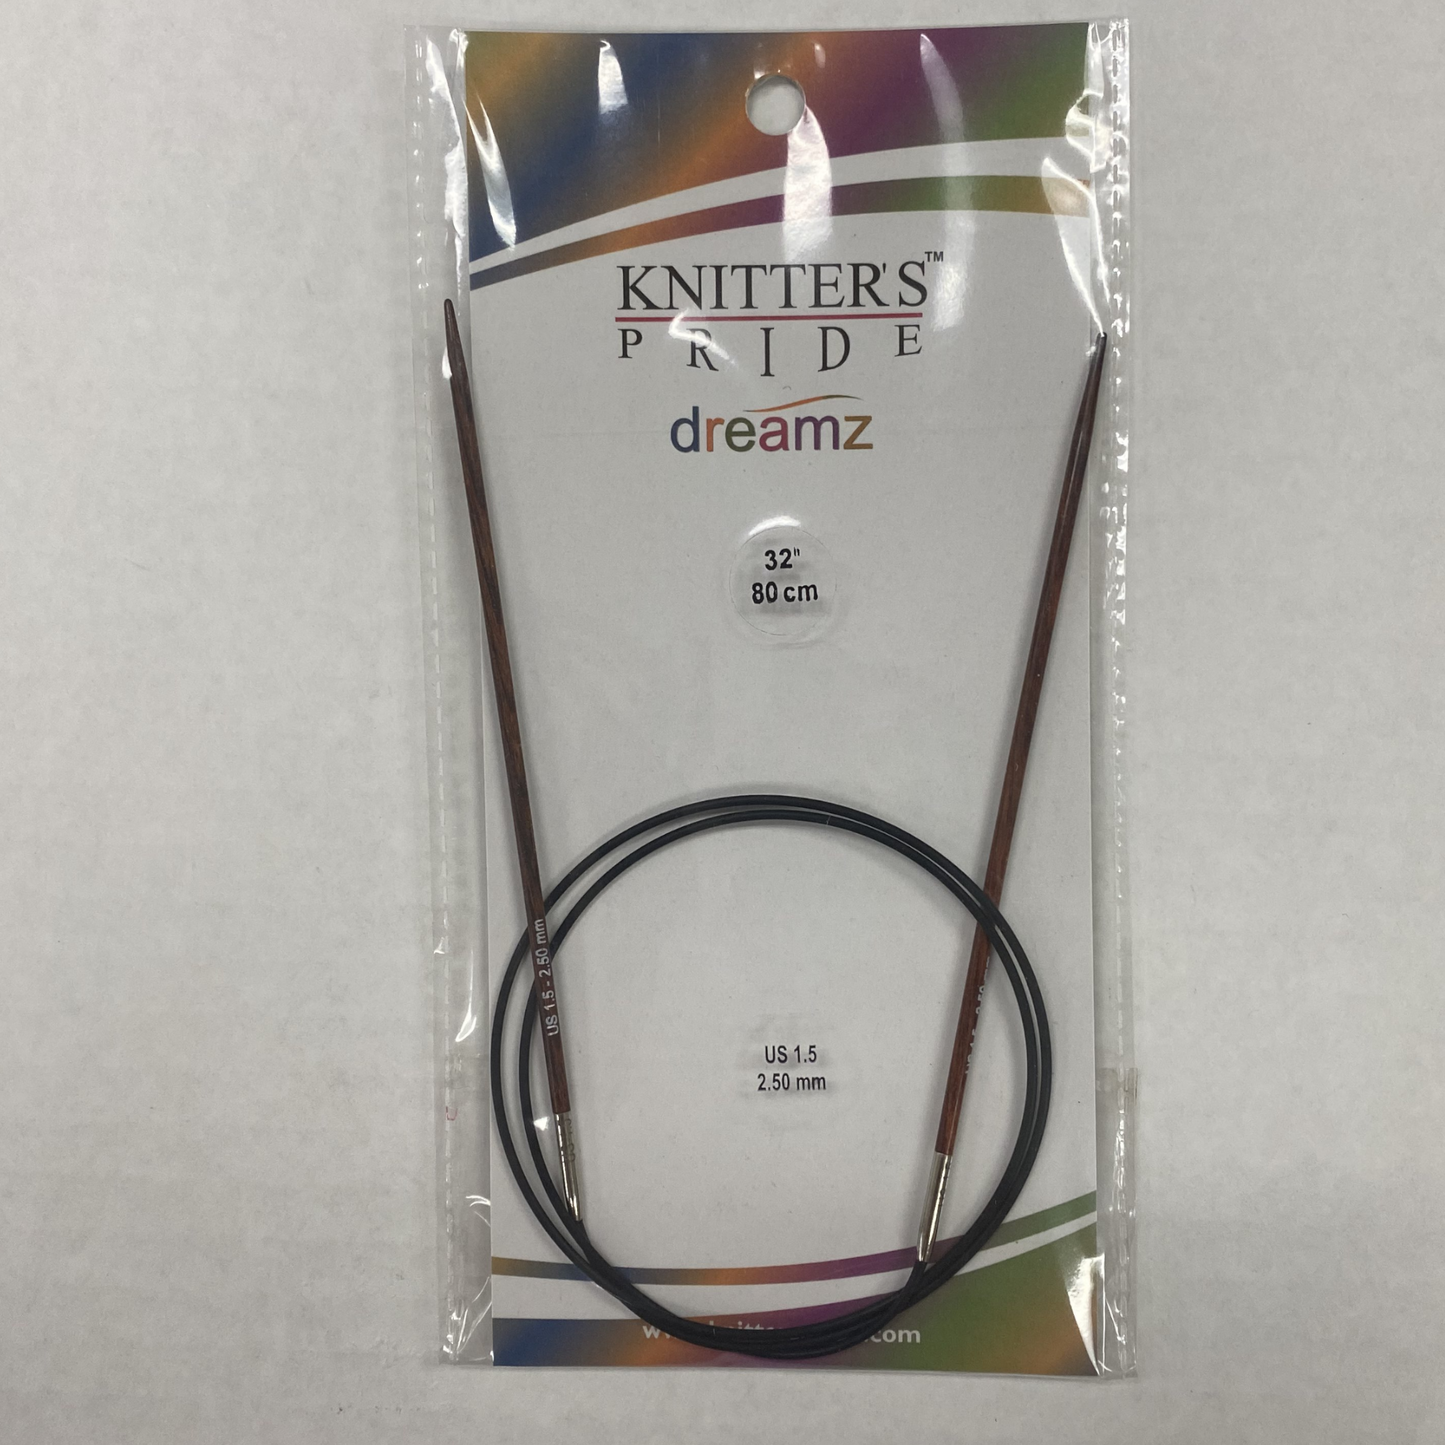 Knitter's Pride - Dreamz - US 1.5 / 2.50mm Fixed Circular Needles